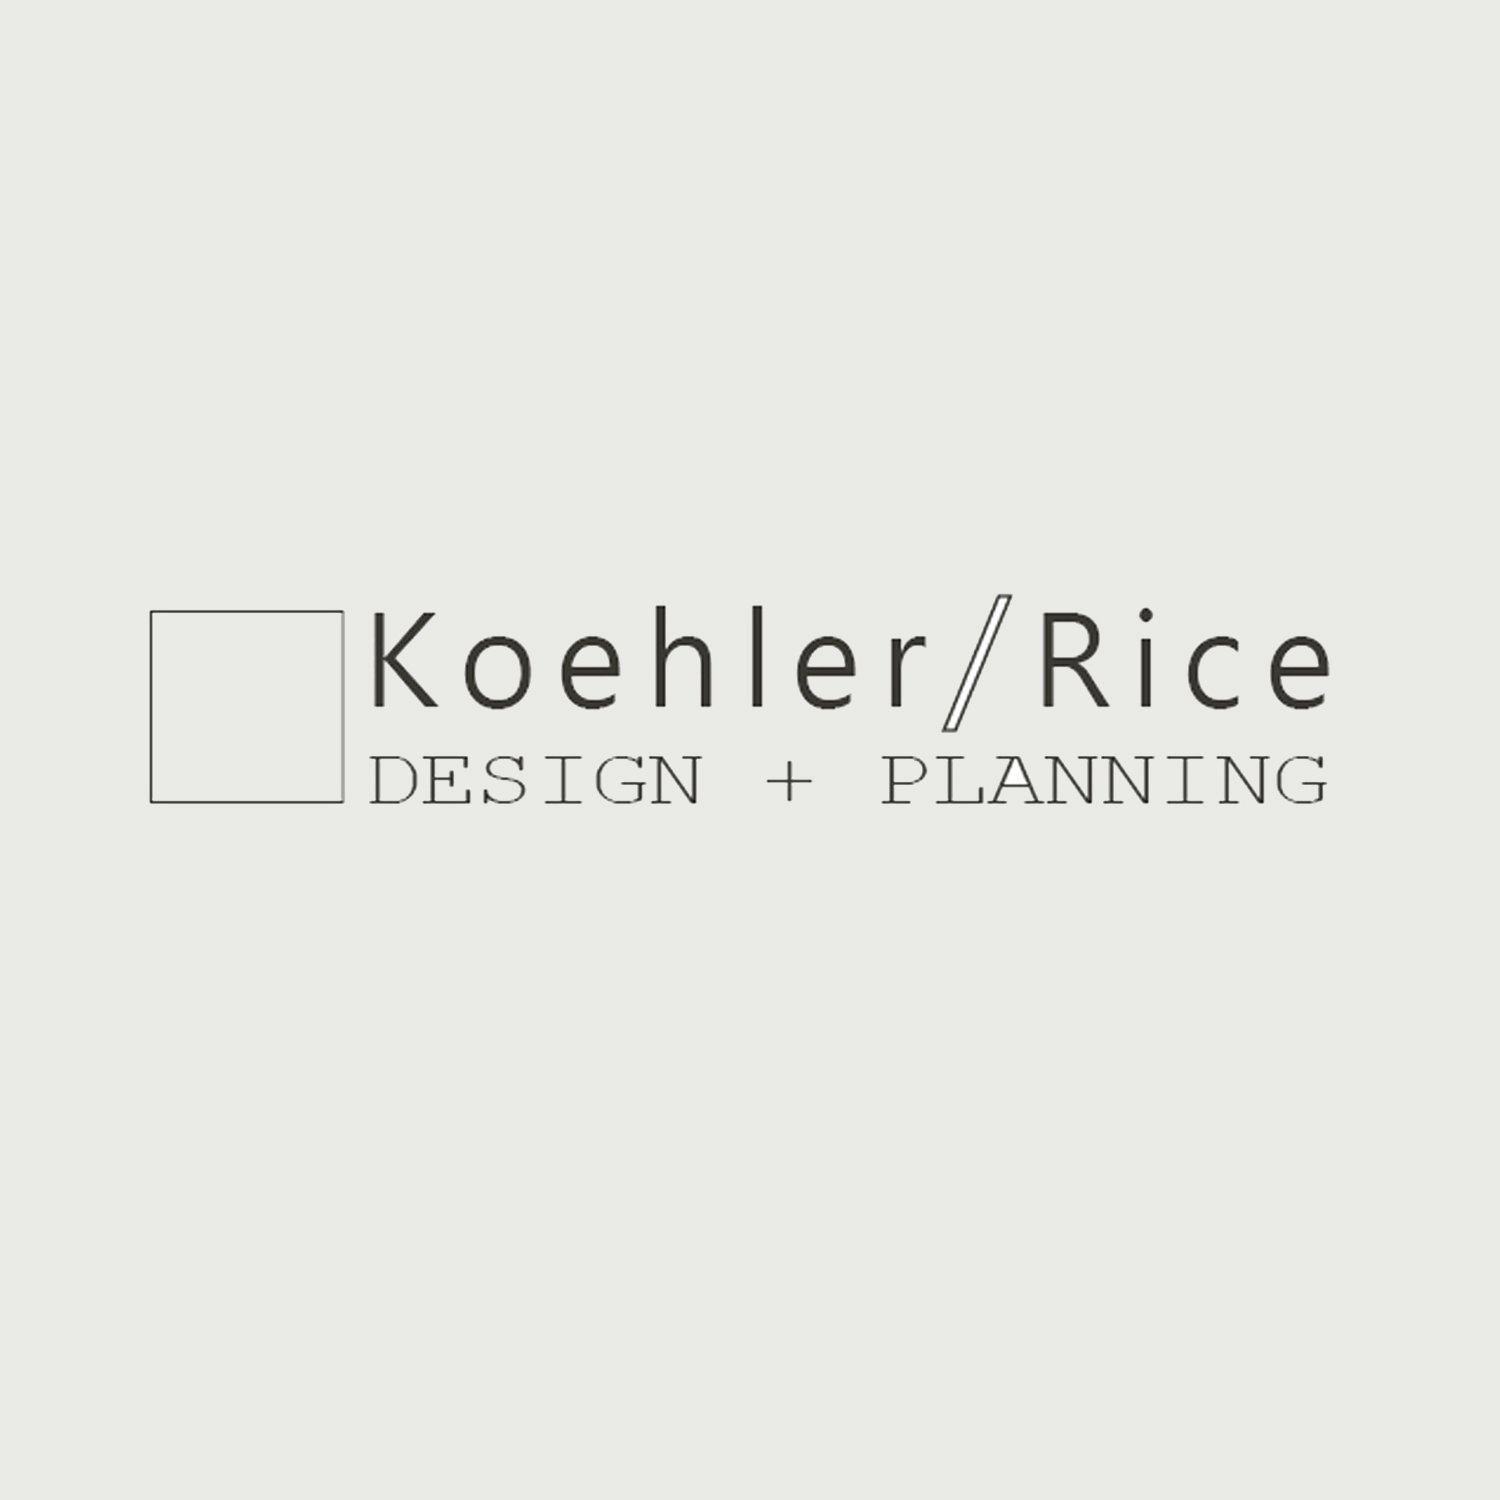 KOEHLER/RICE DESIGN + PLANNING